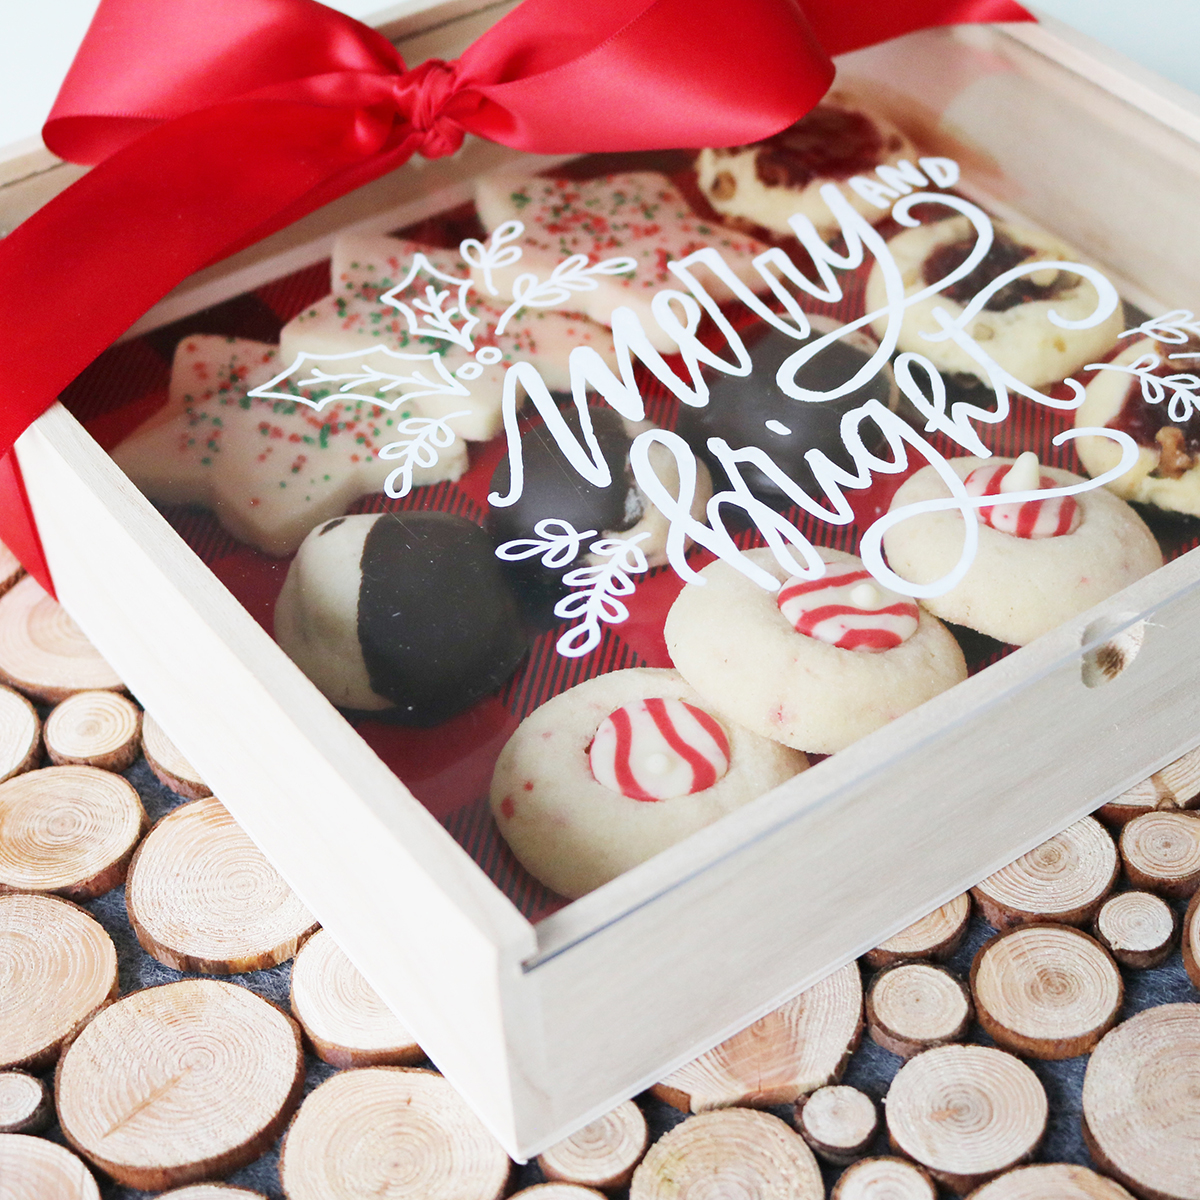 Sweet hostess gift wrapping inspiration | Creative Bag and Bake Sale Toronto